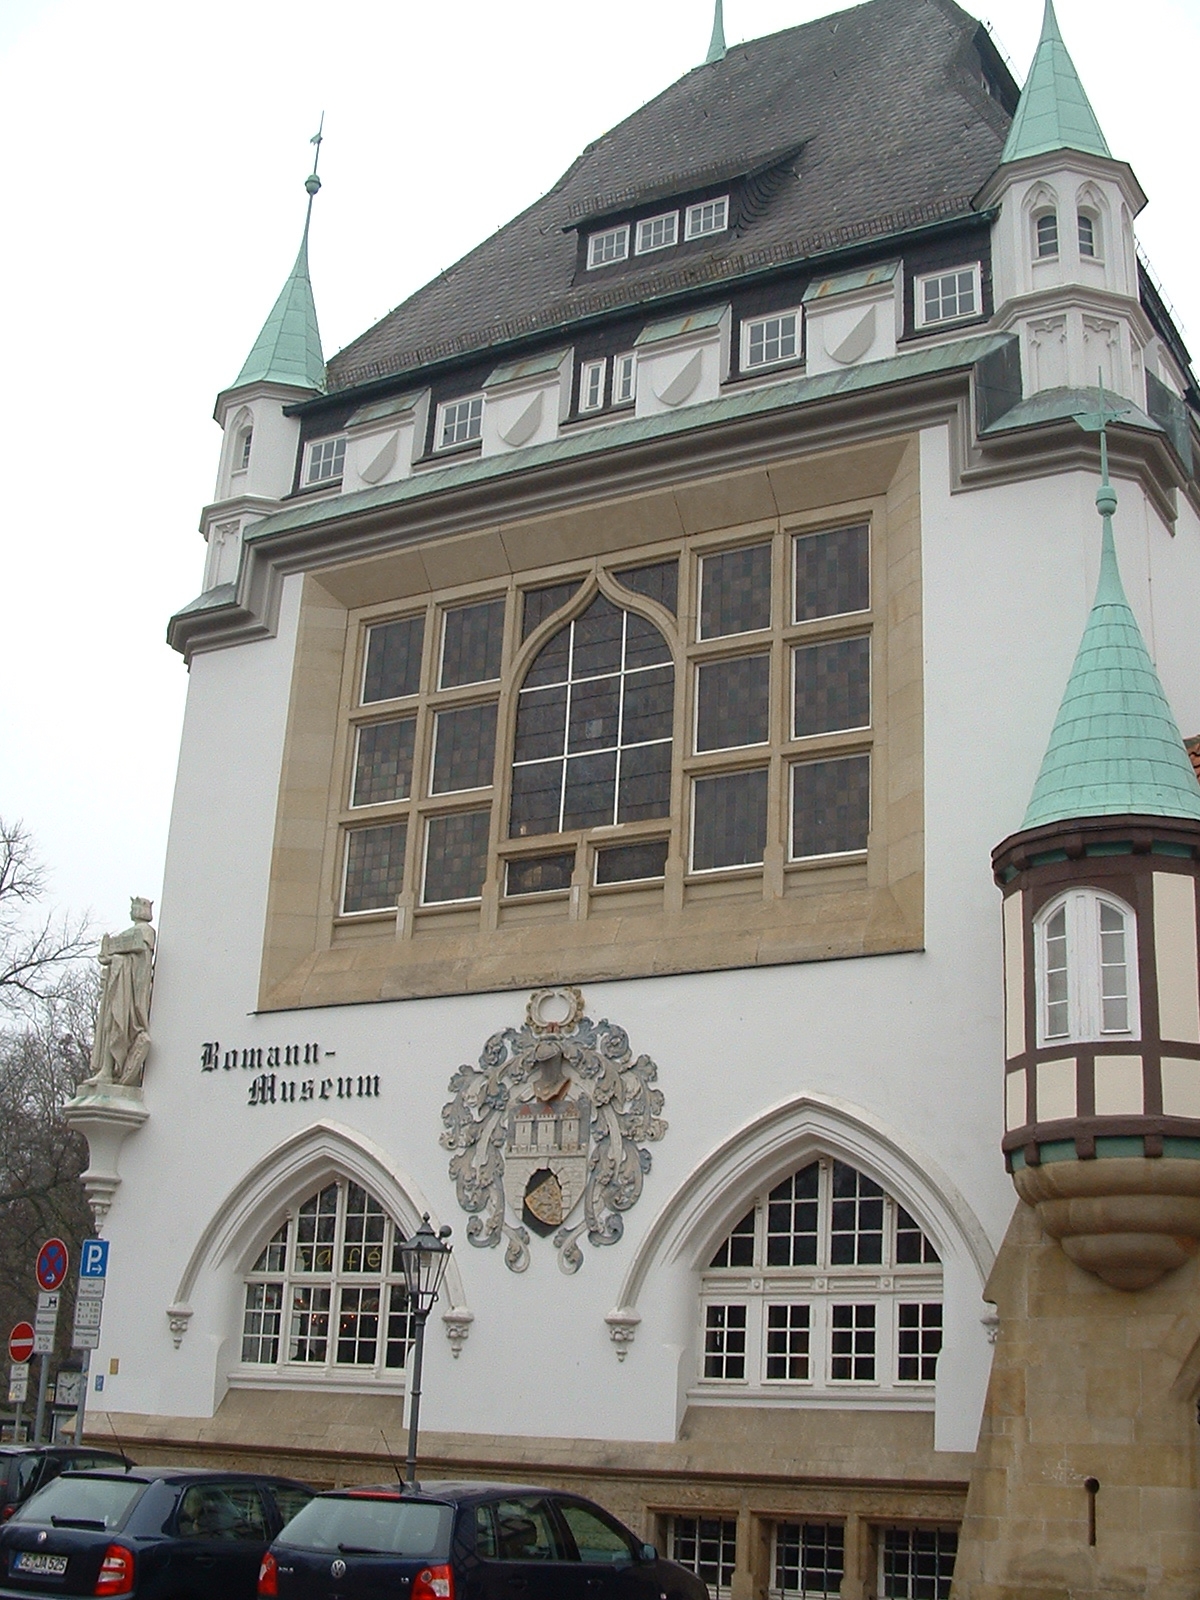 Bomann Museum in Celle